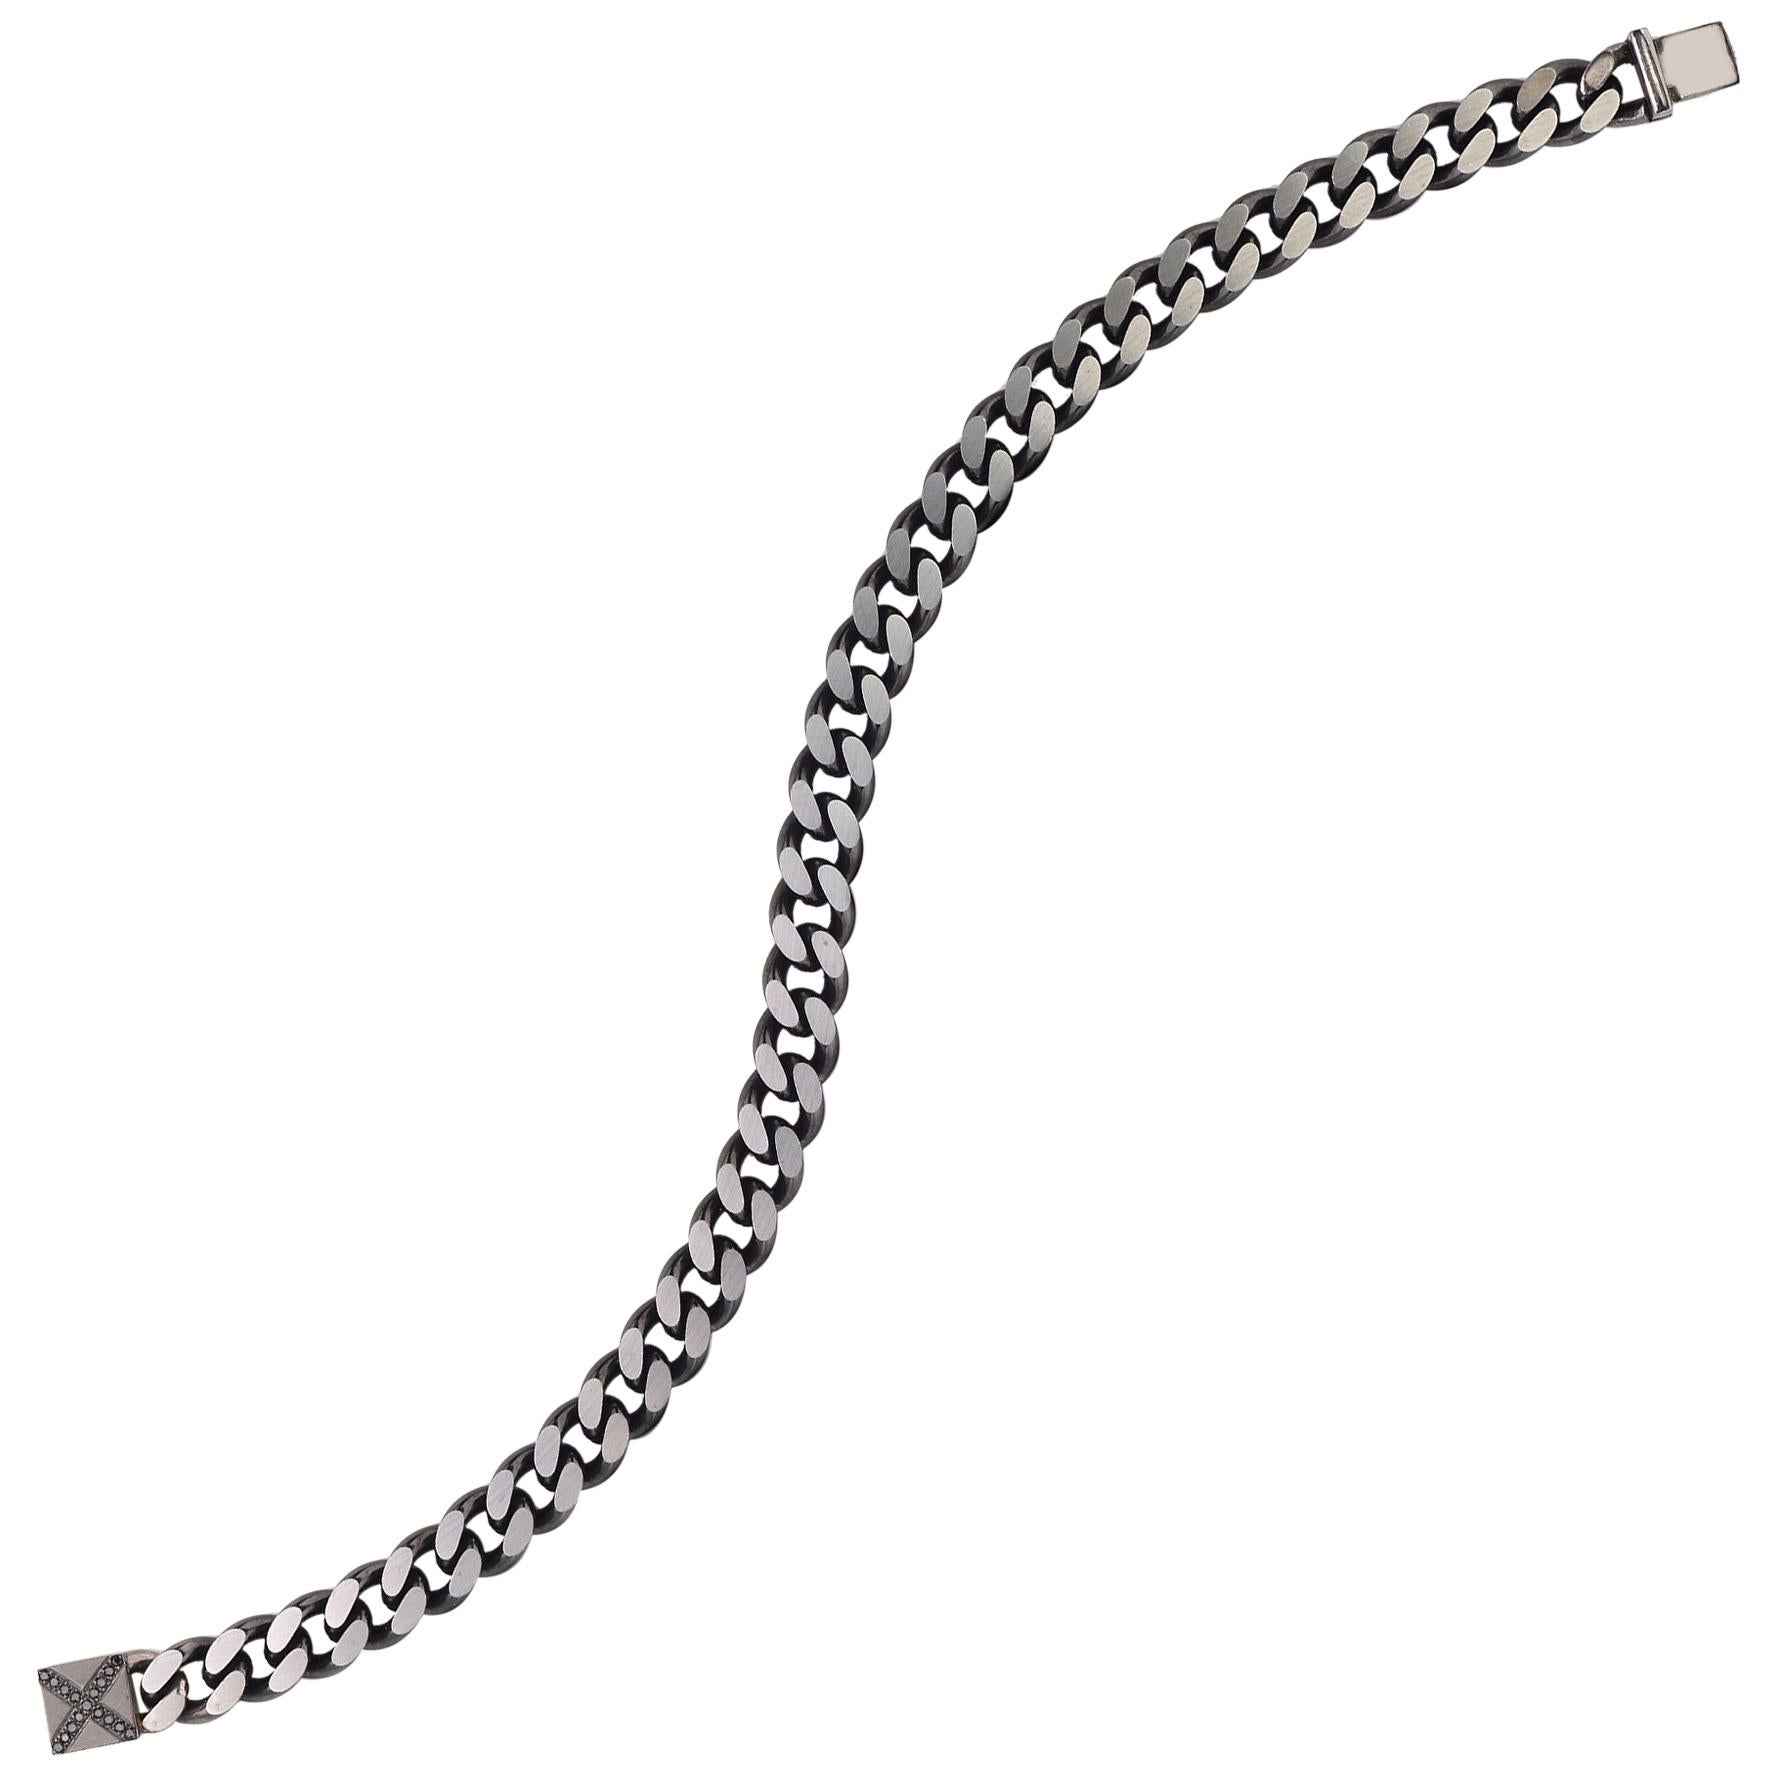 Eva Fehren Stainless Steel Bracelet with 18 Karat Gold Clasp with Black Diamonds